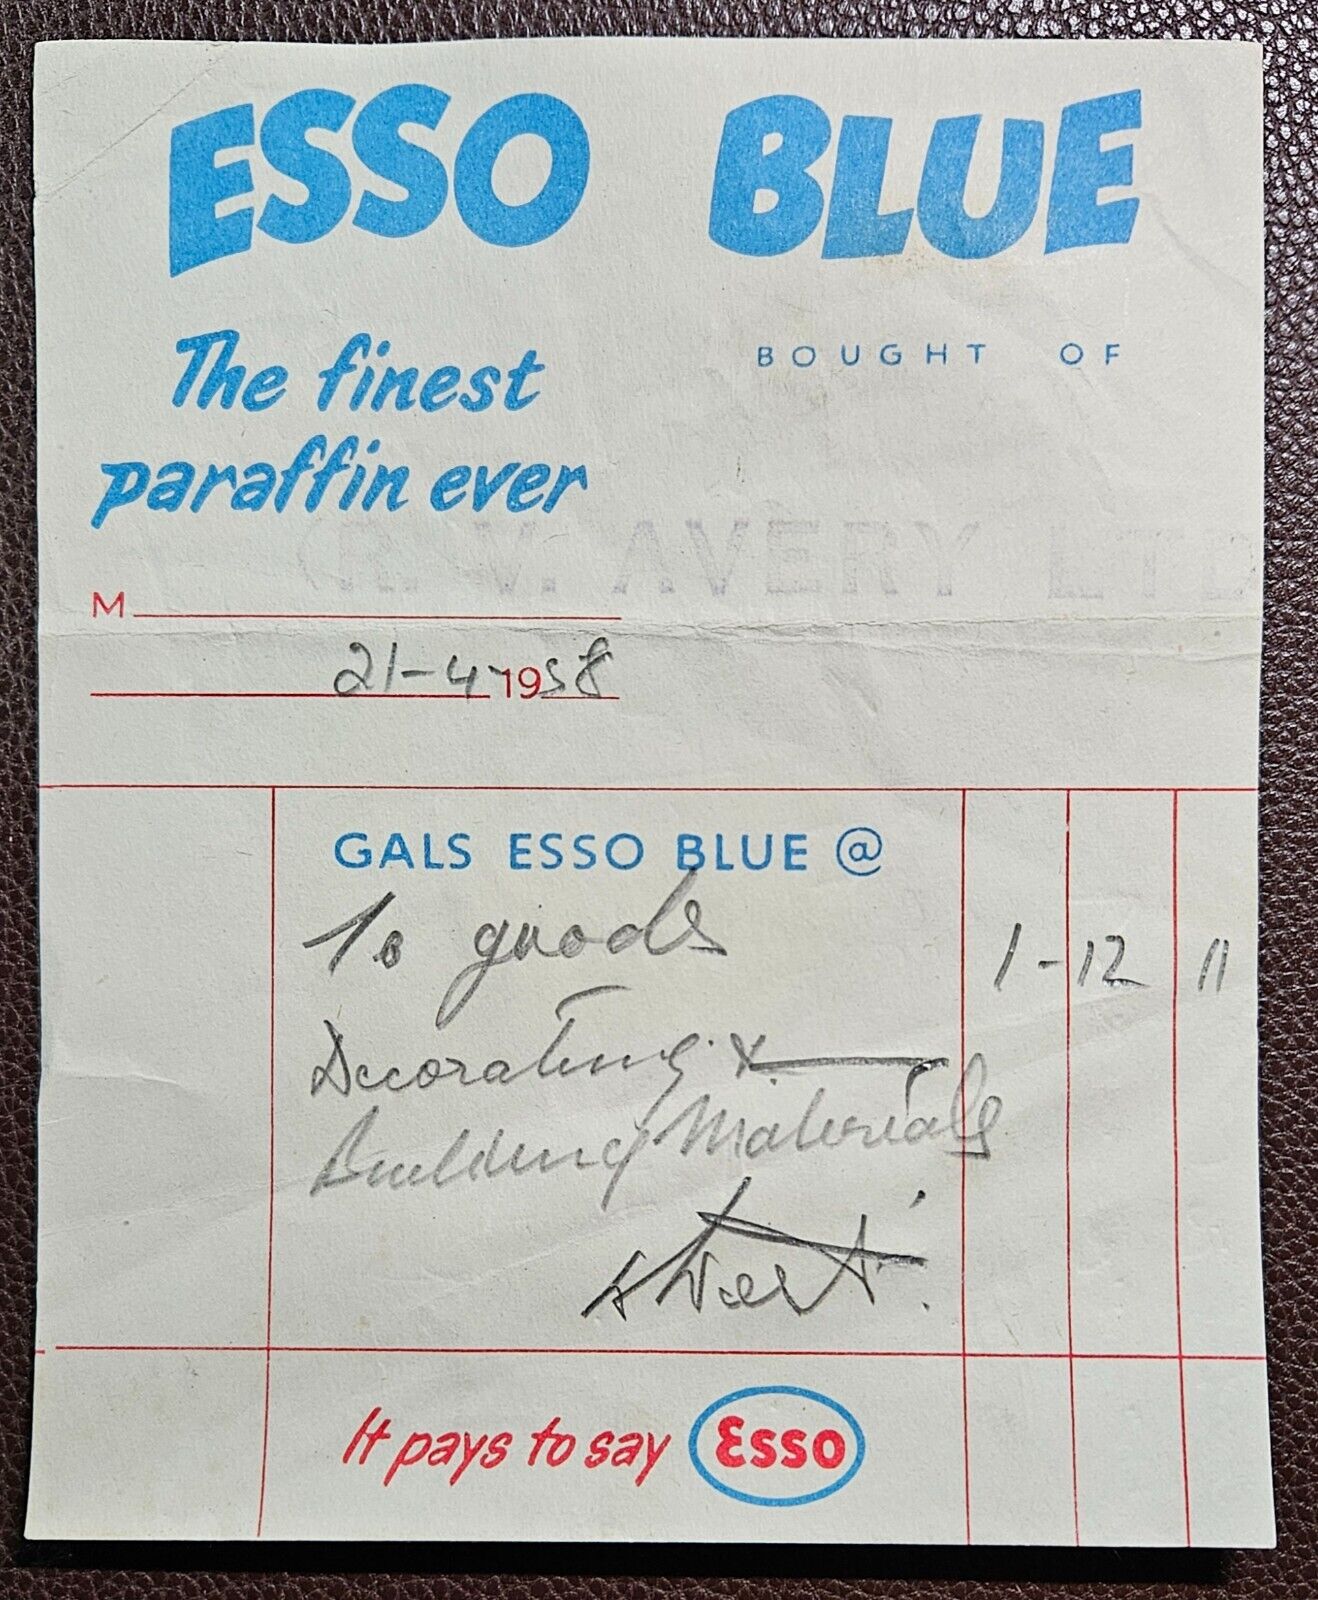 1958 Esso Blue Invoice from R. V. Avery Ltd